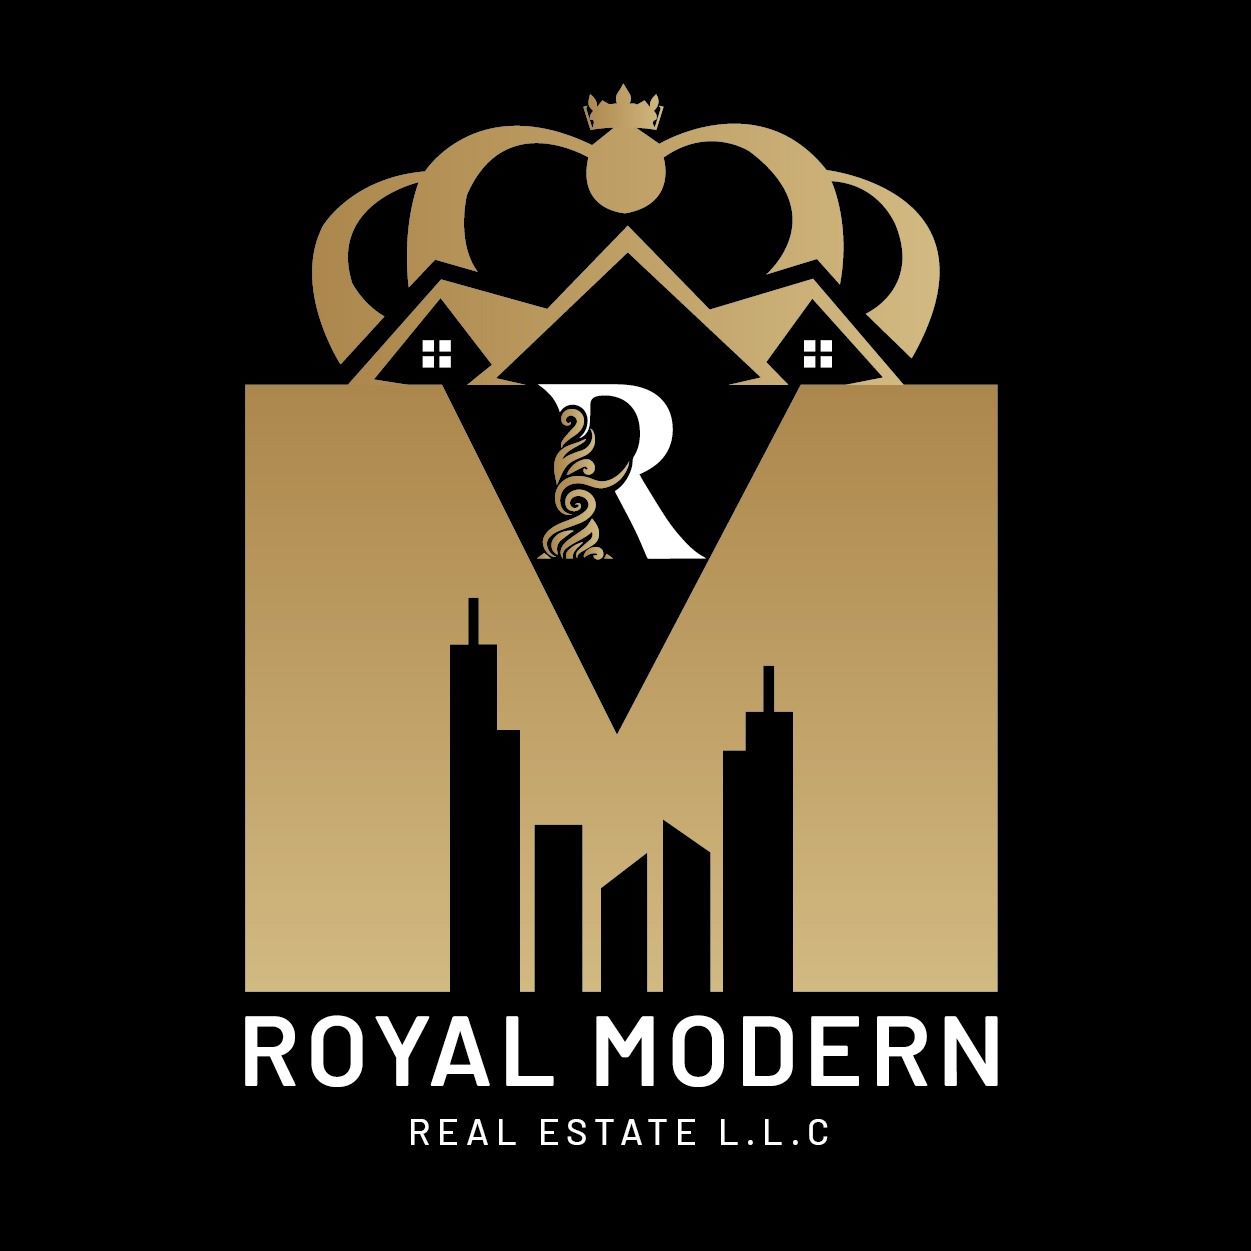 Royal Modern Real Estate